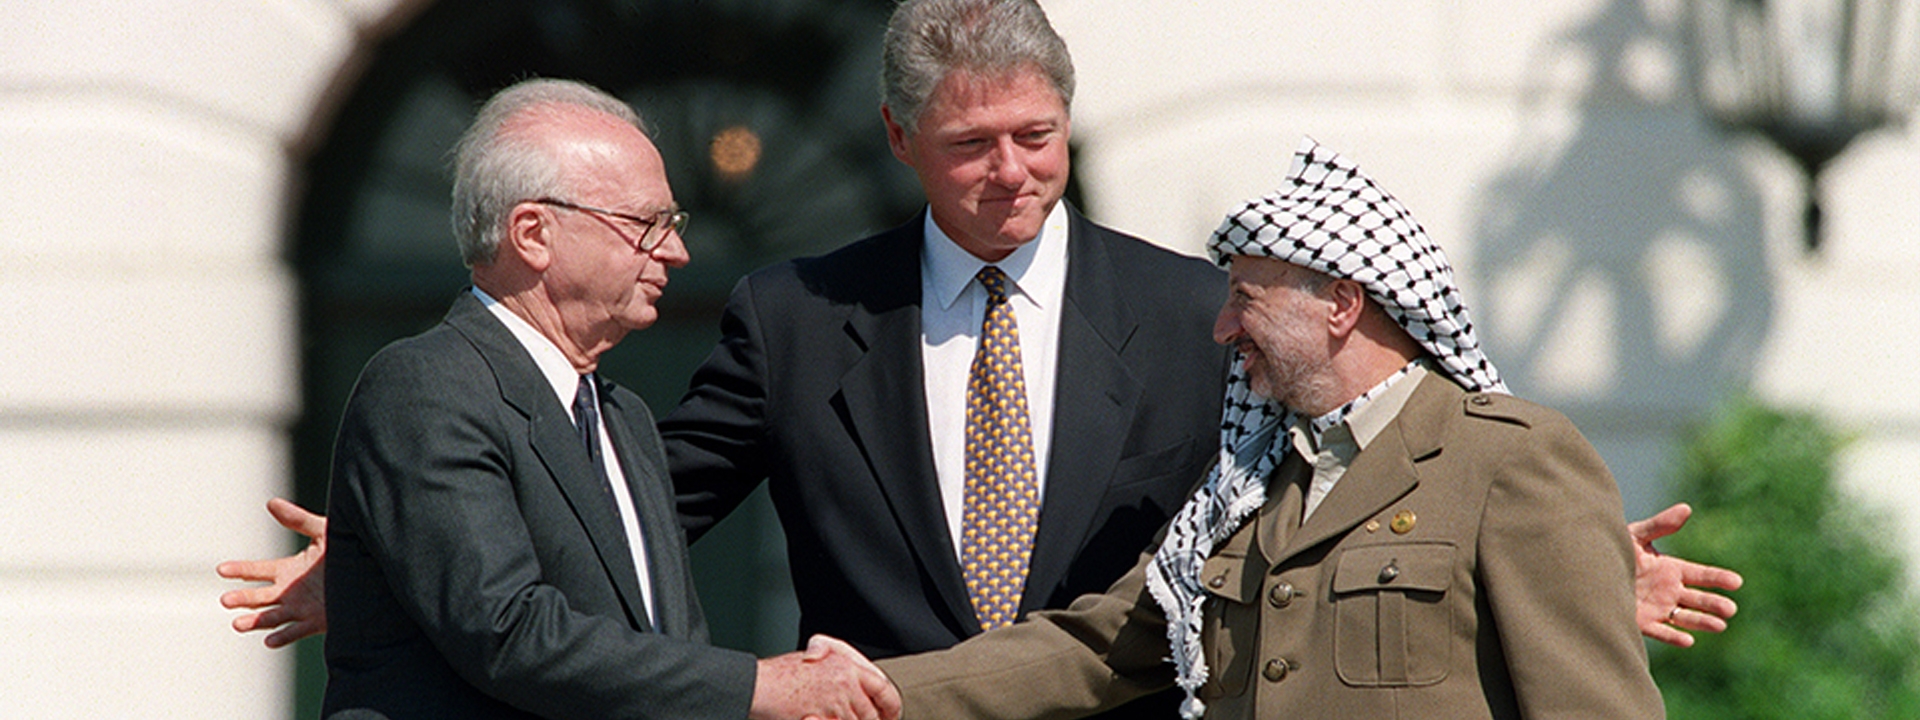 Yitzhak Rabin, Bill Clinton et Yasser Arafat durant les accords d'Oslo le 13 septembre 1993.